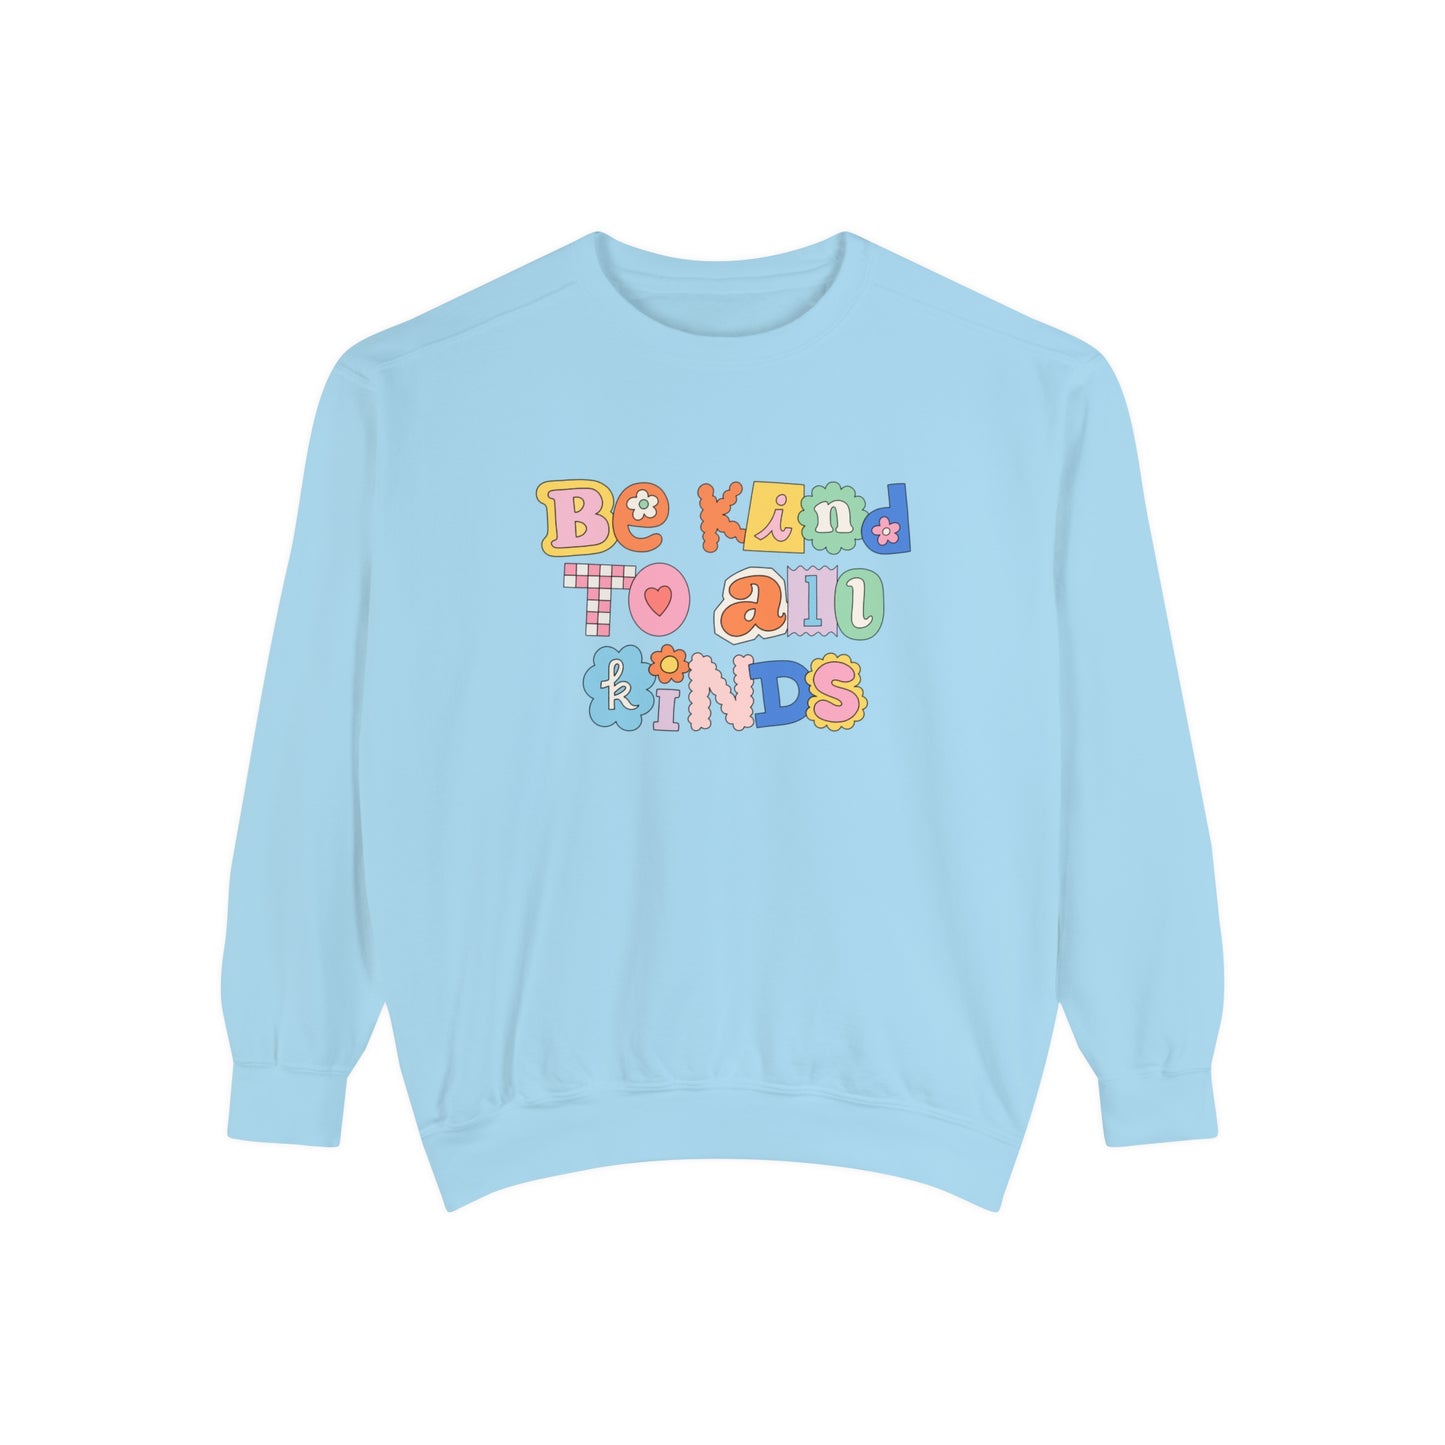 Be Kind to All Kinds Comfort Colors Sweatshirt